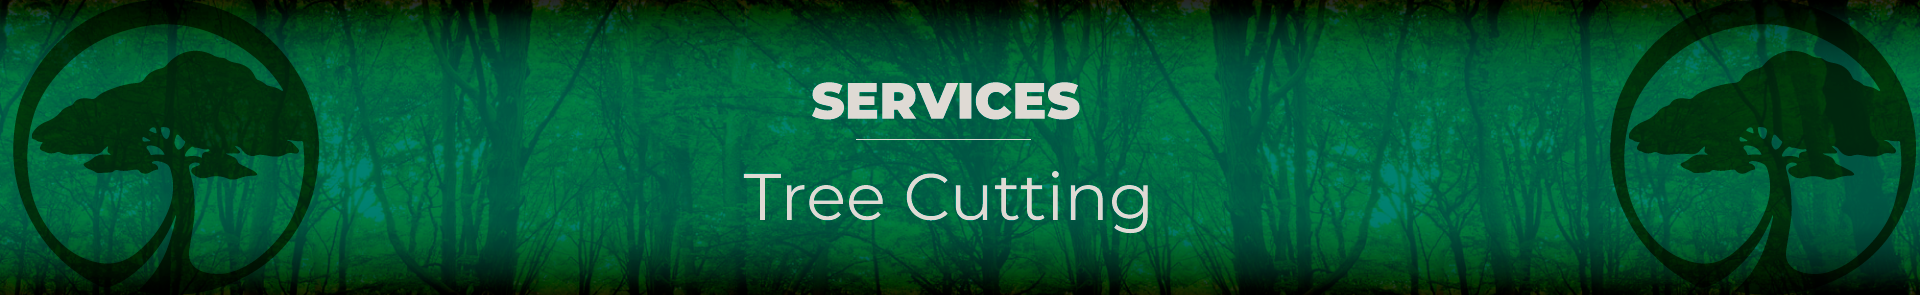 Tree Cutting Service Visalia 